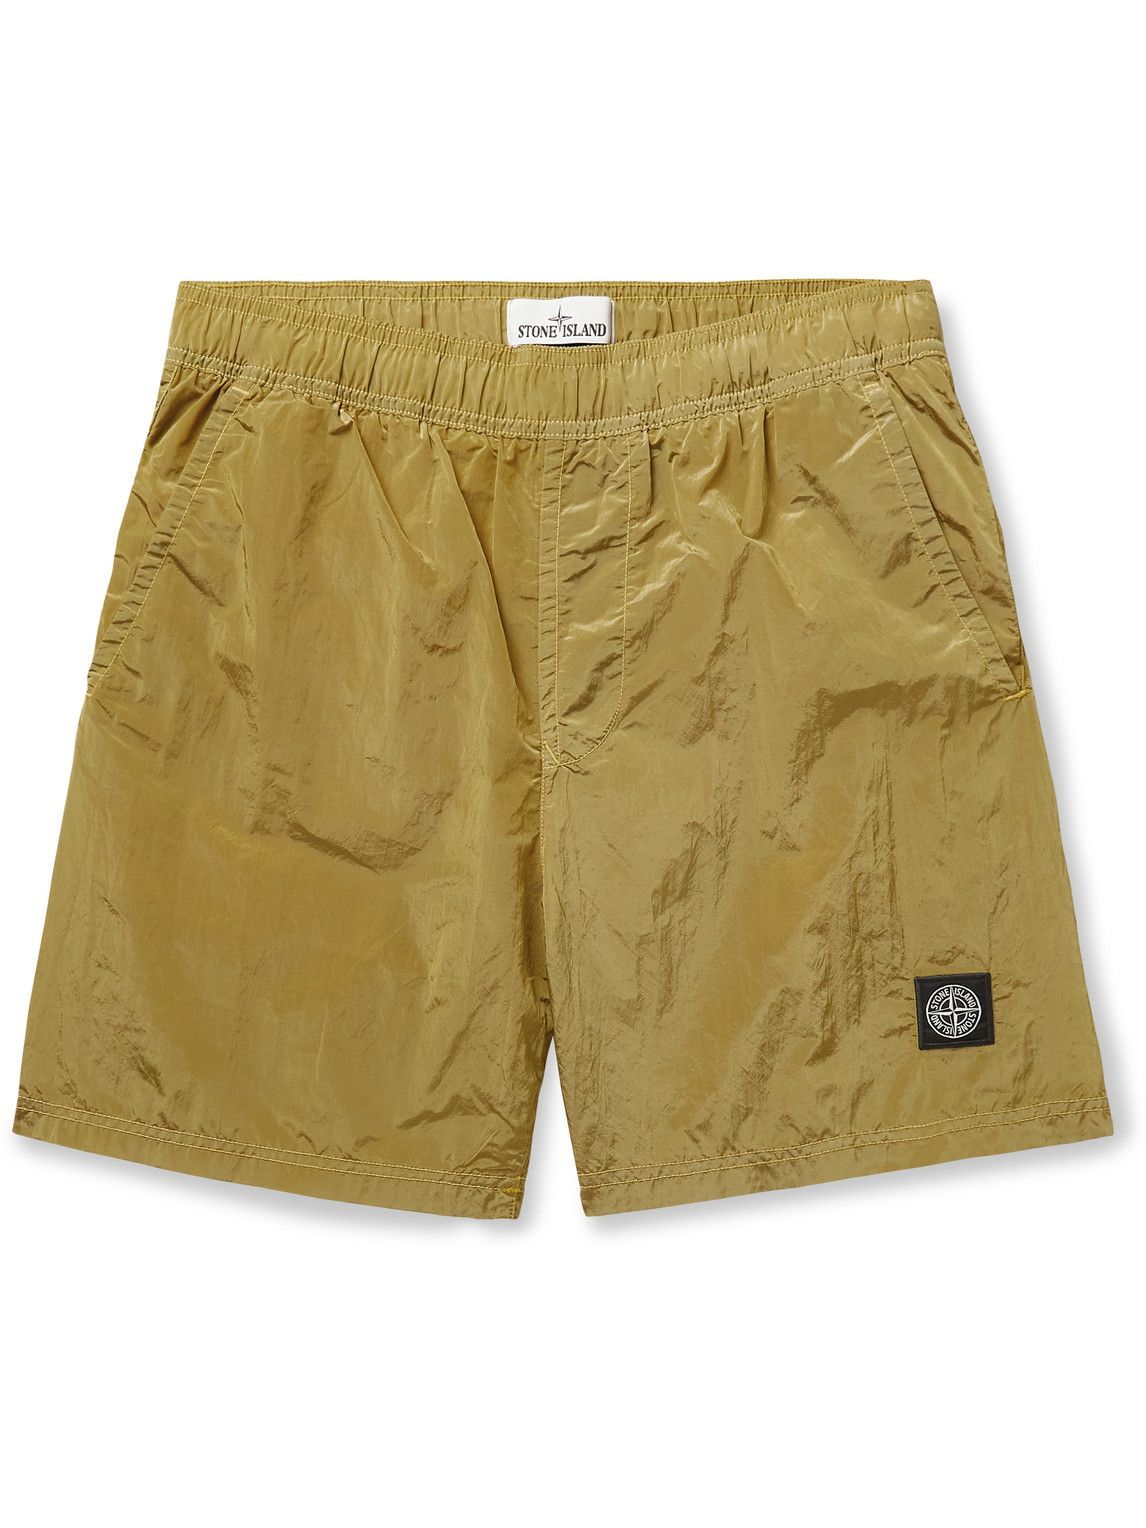 Stone Island - Mid-Length Logo-Appliquéd ECONYL Swim Shorts - Yellow ...